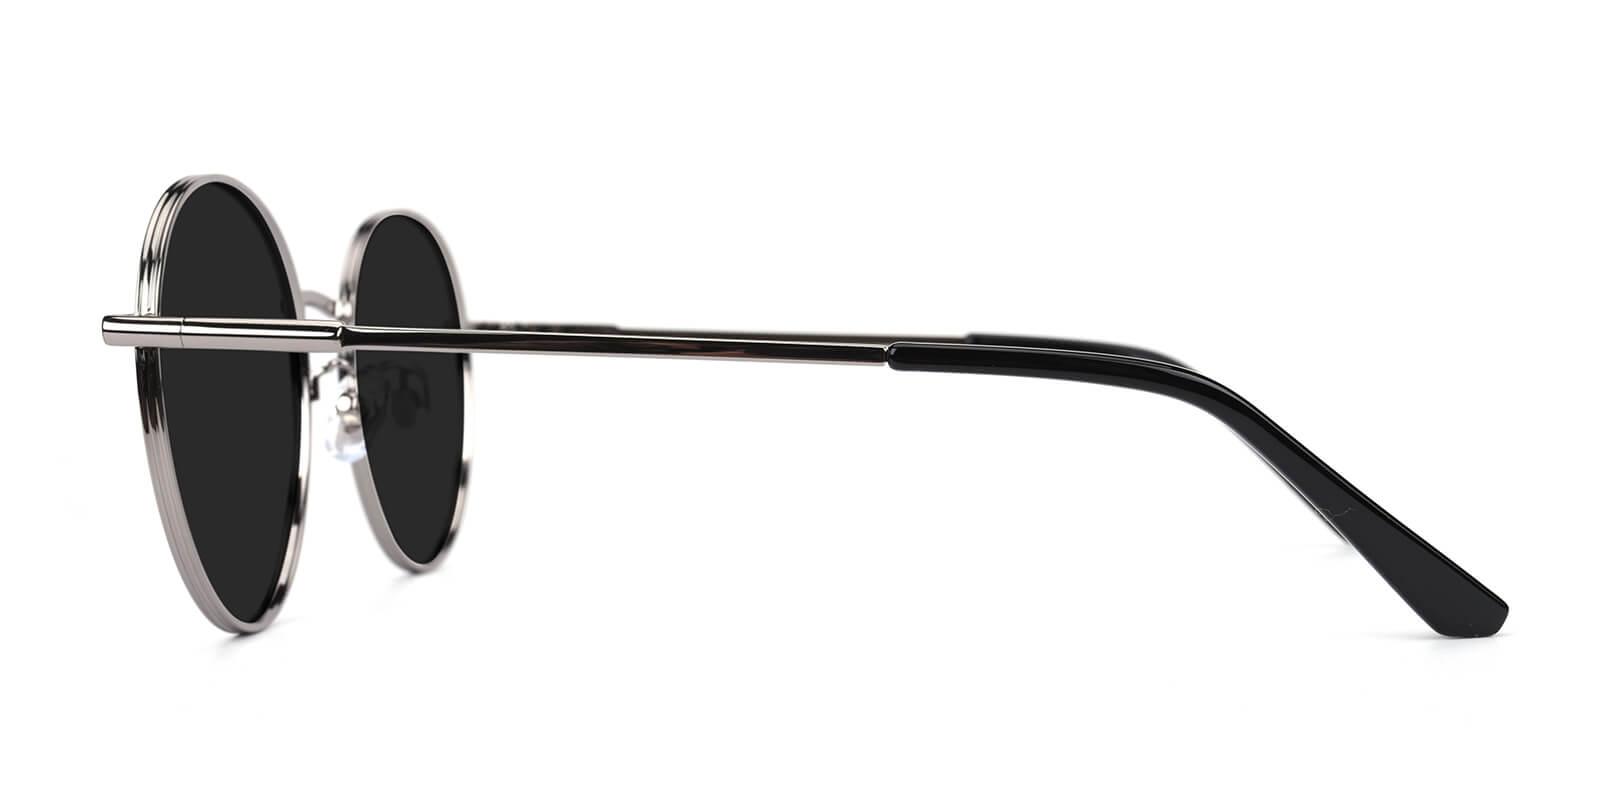 Krueger-Gun-Round-Metal-Sunglasses-detail